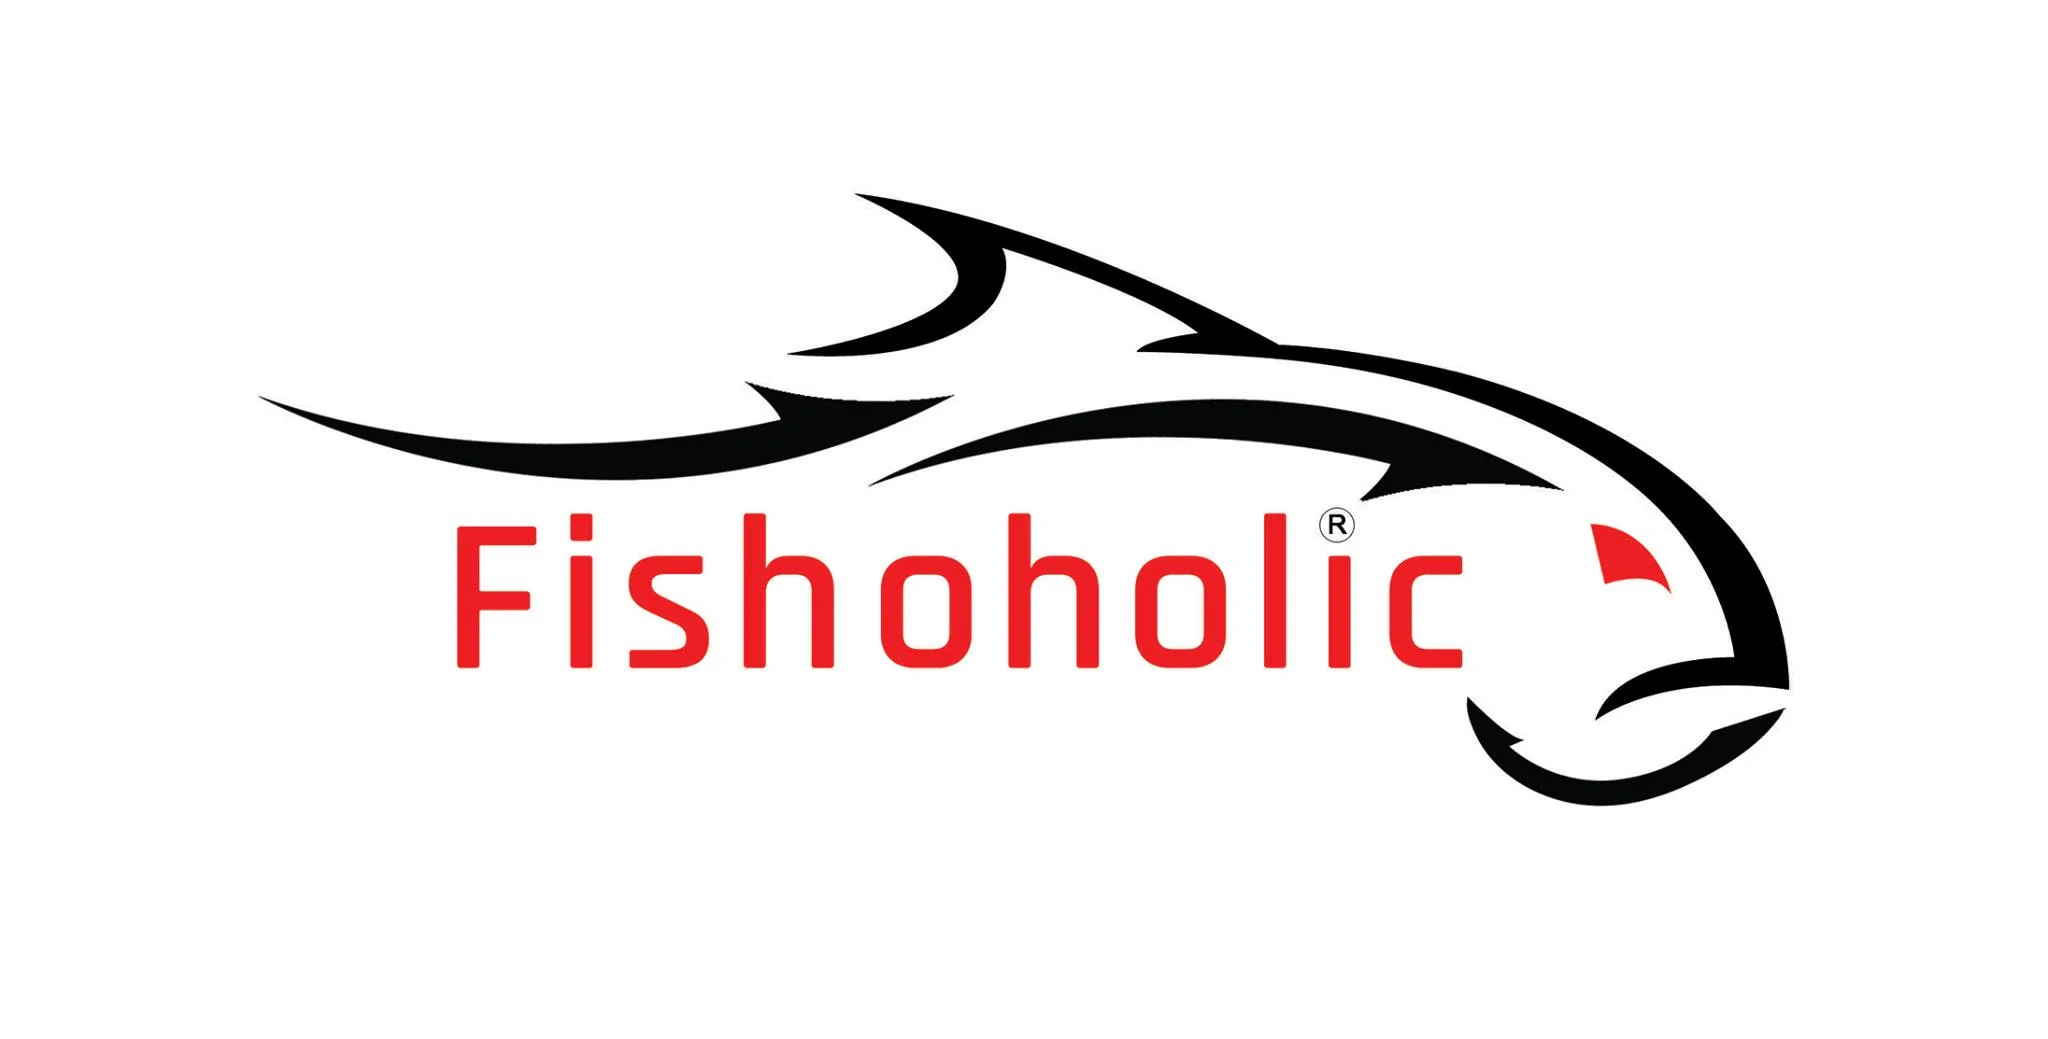 Fishoholic